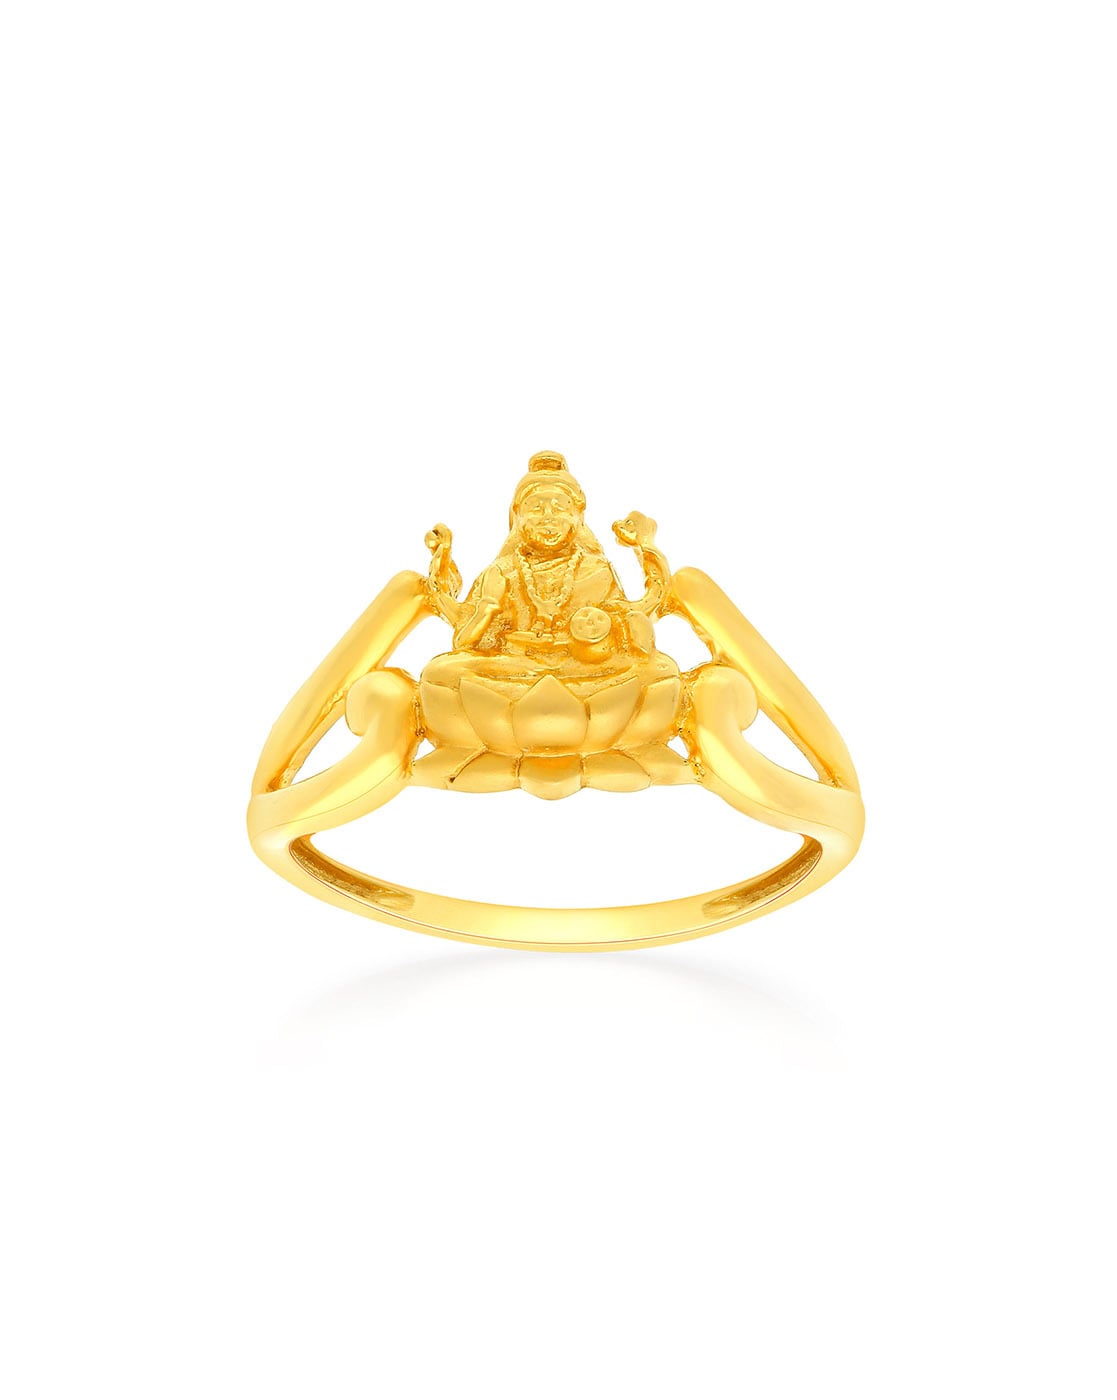 Intricately Crafted 22KT Gold Goddess Lakshmi Ring